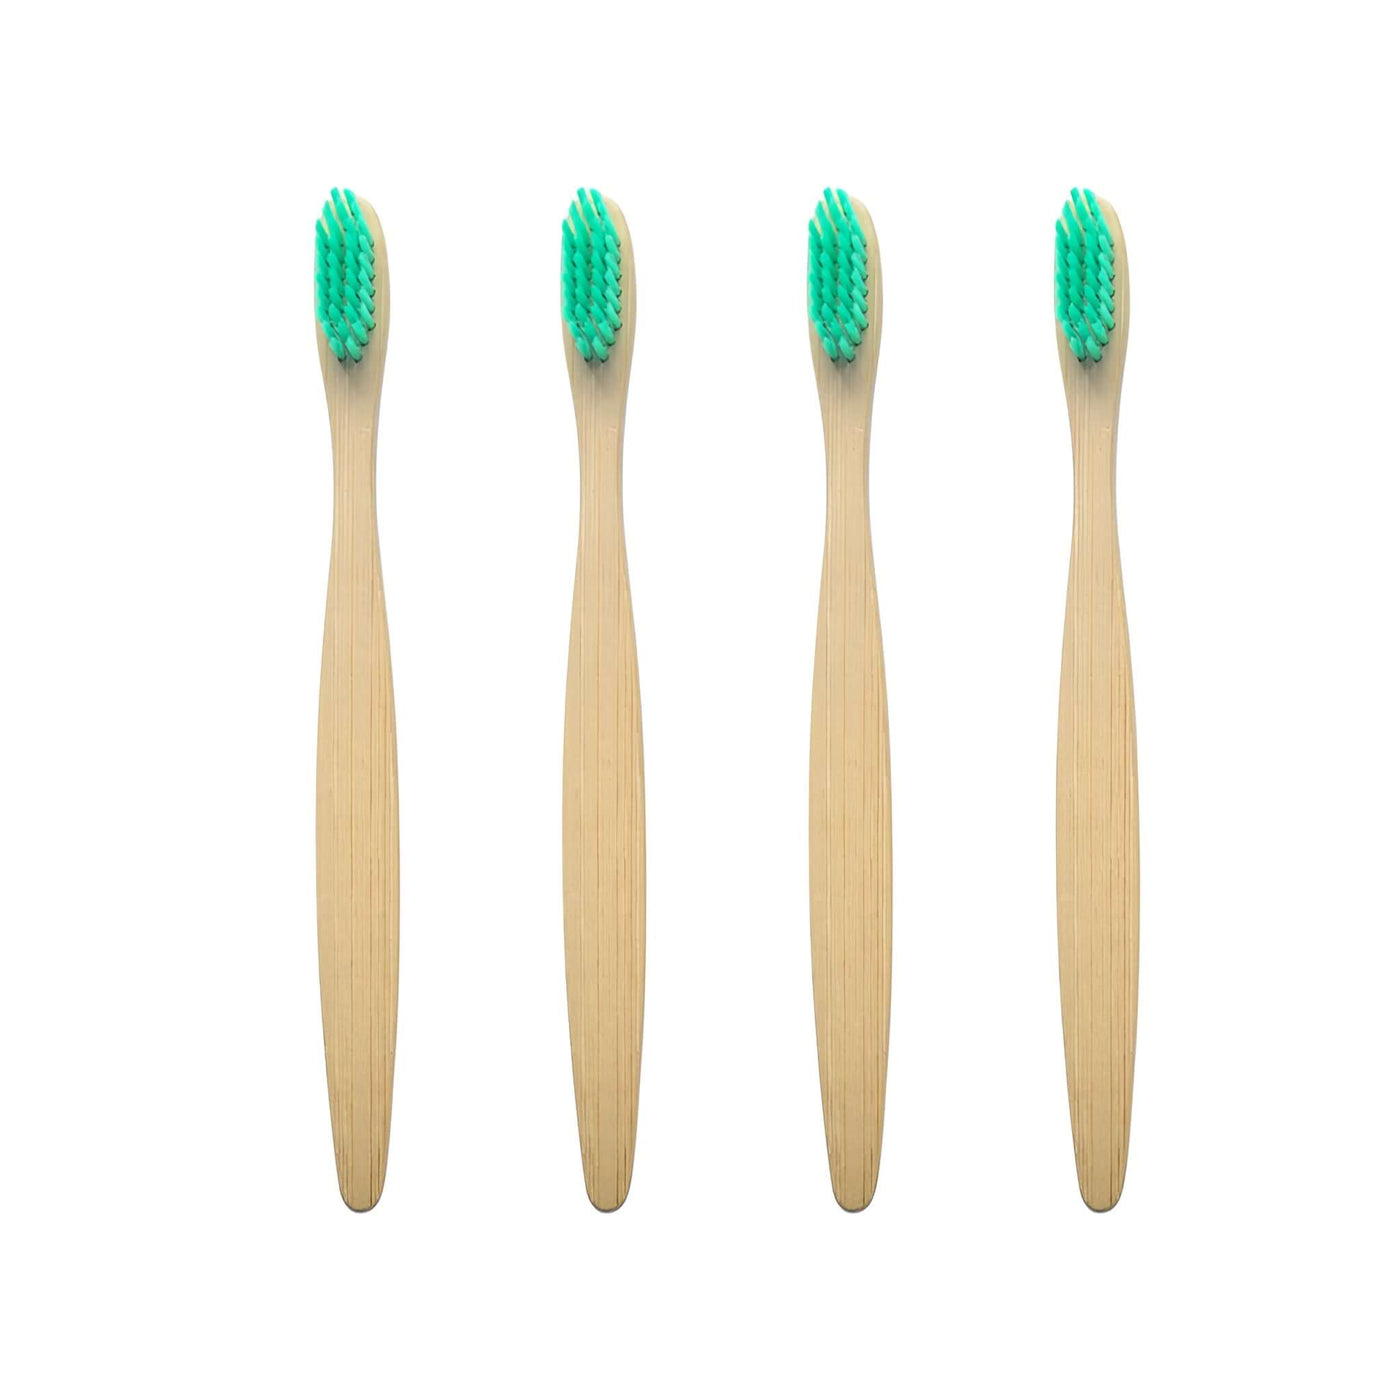 4 thoothbrush bamboo